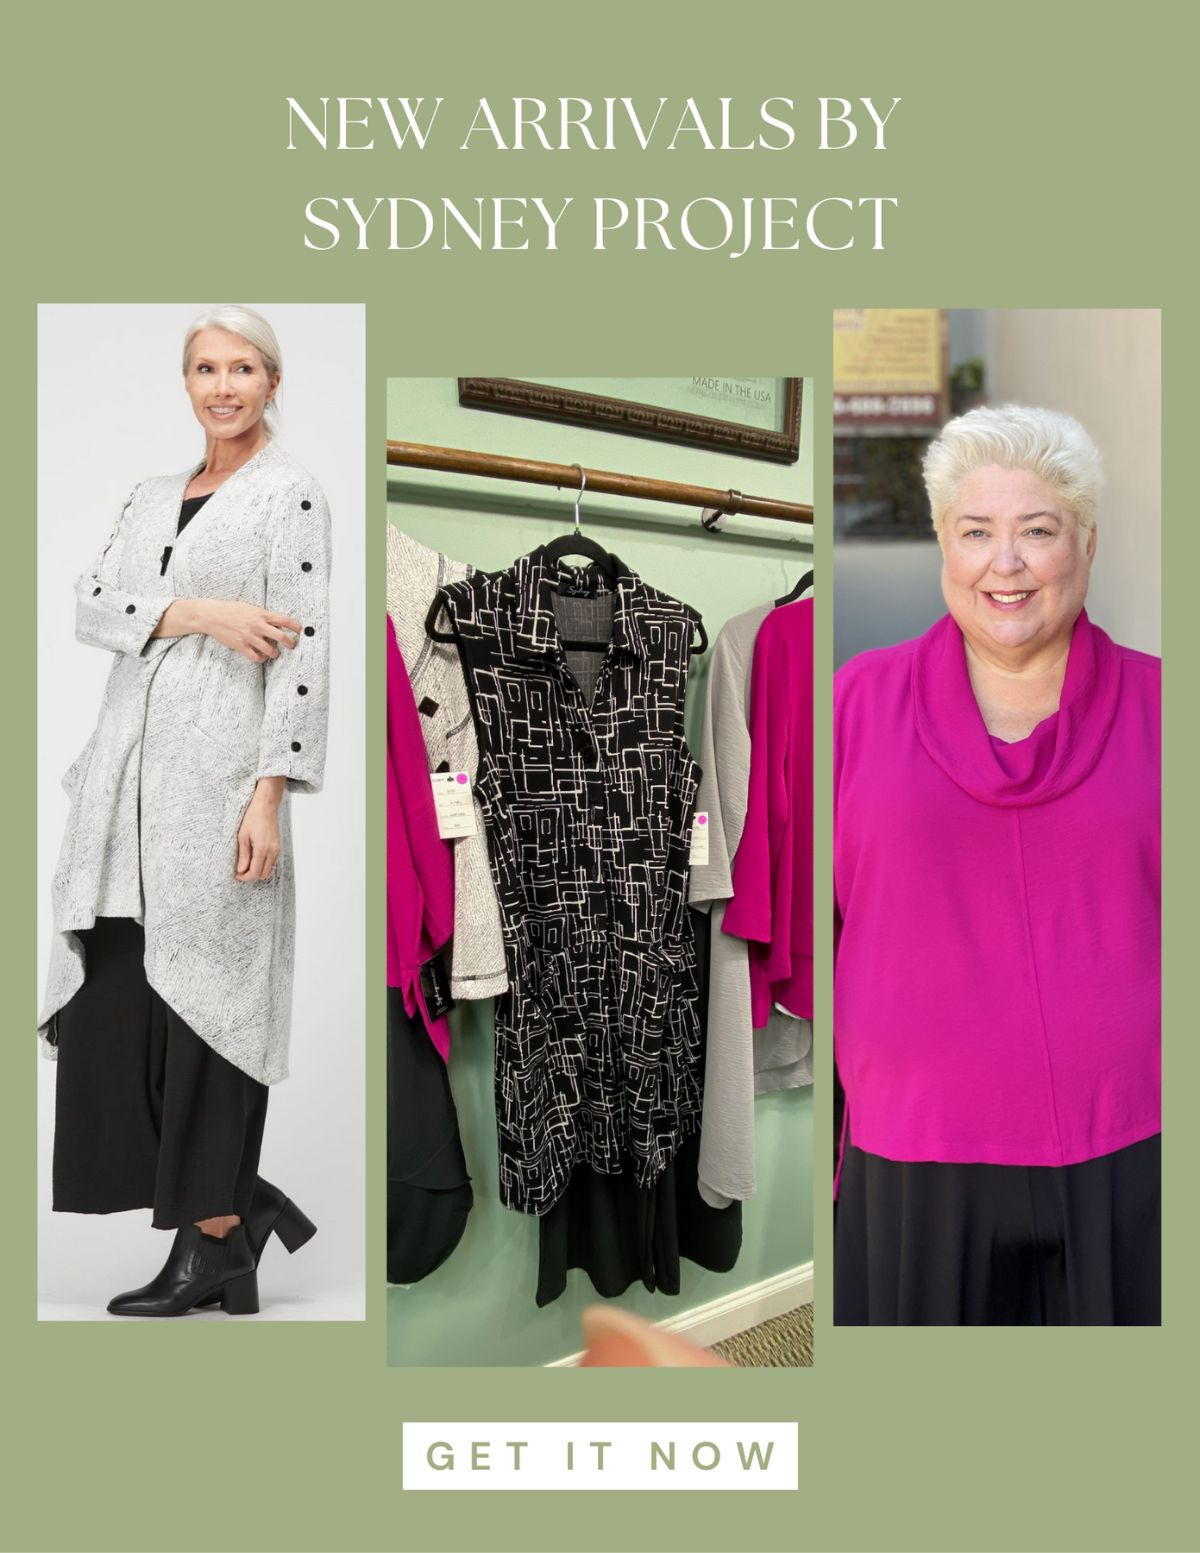 Sydney Project